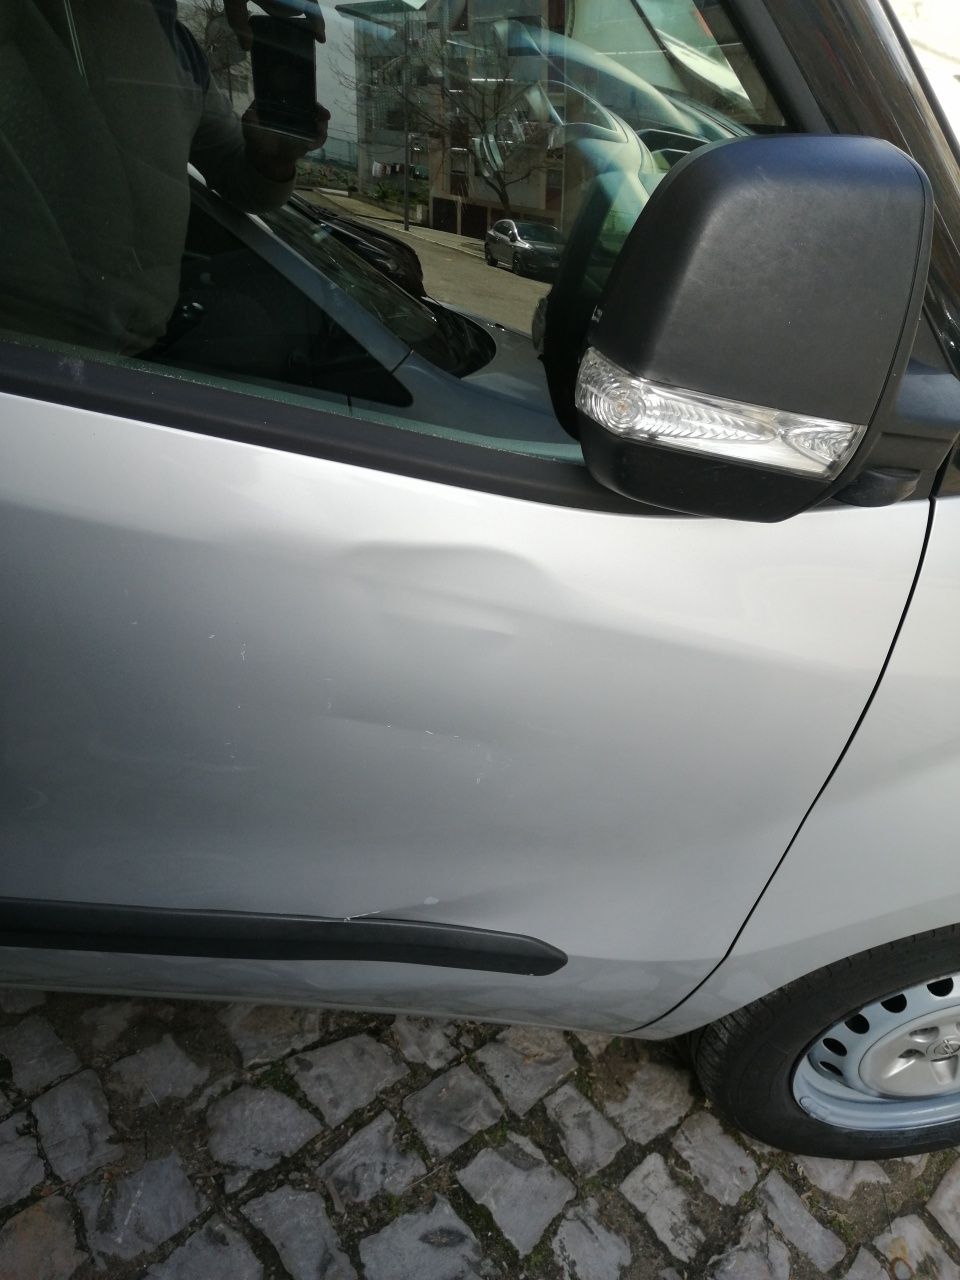 Opel Combo 1.3 Cdti de 2013 em excelente estado